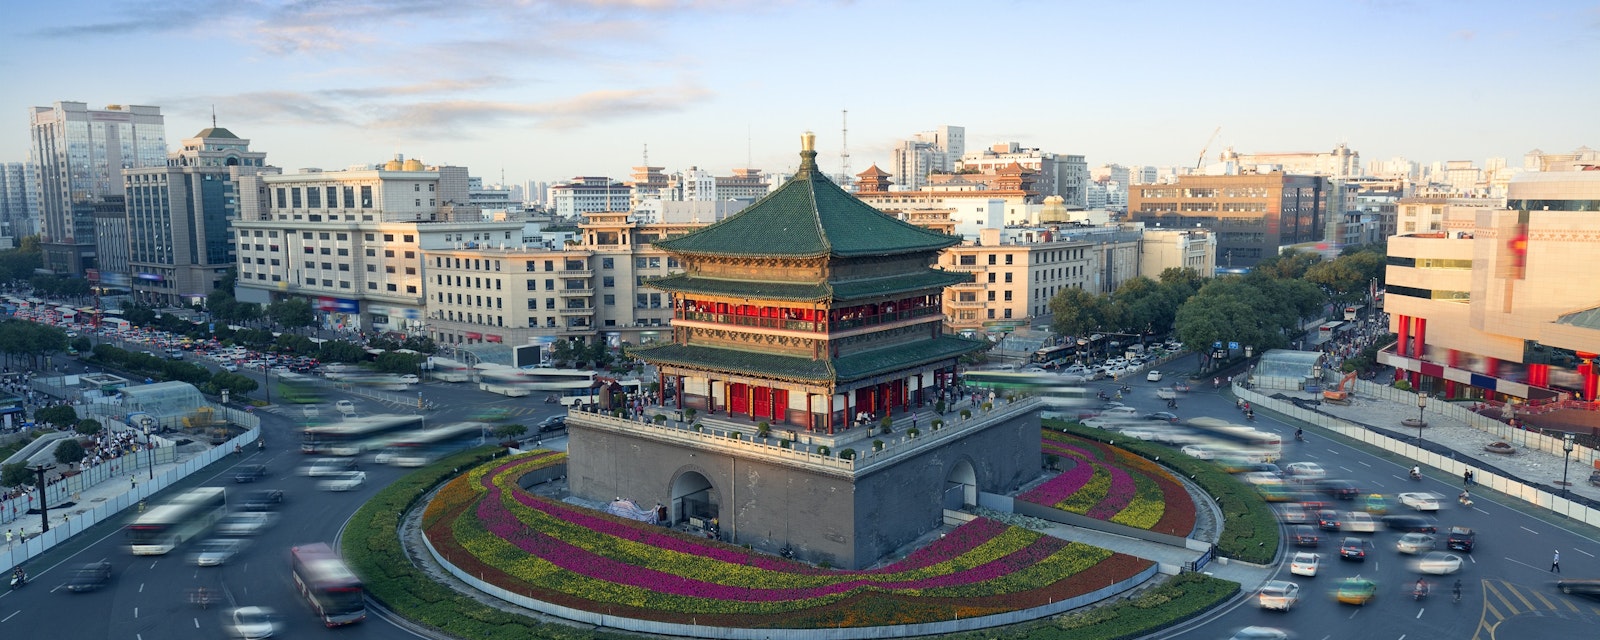 China,Xi’an,City,Landmark,,The,Bell,Tower